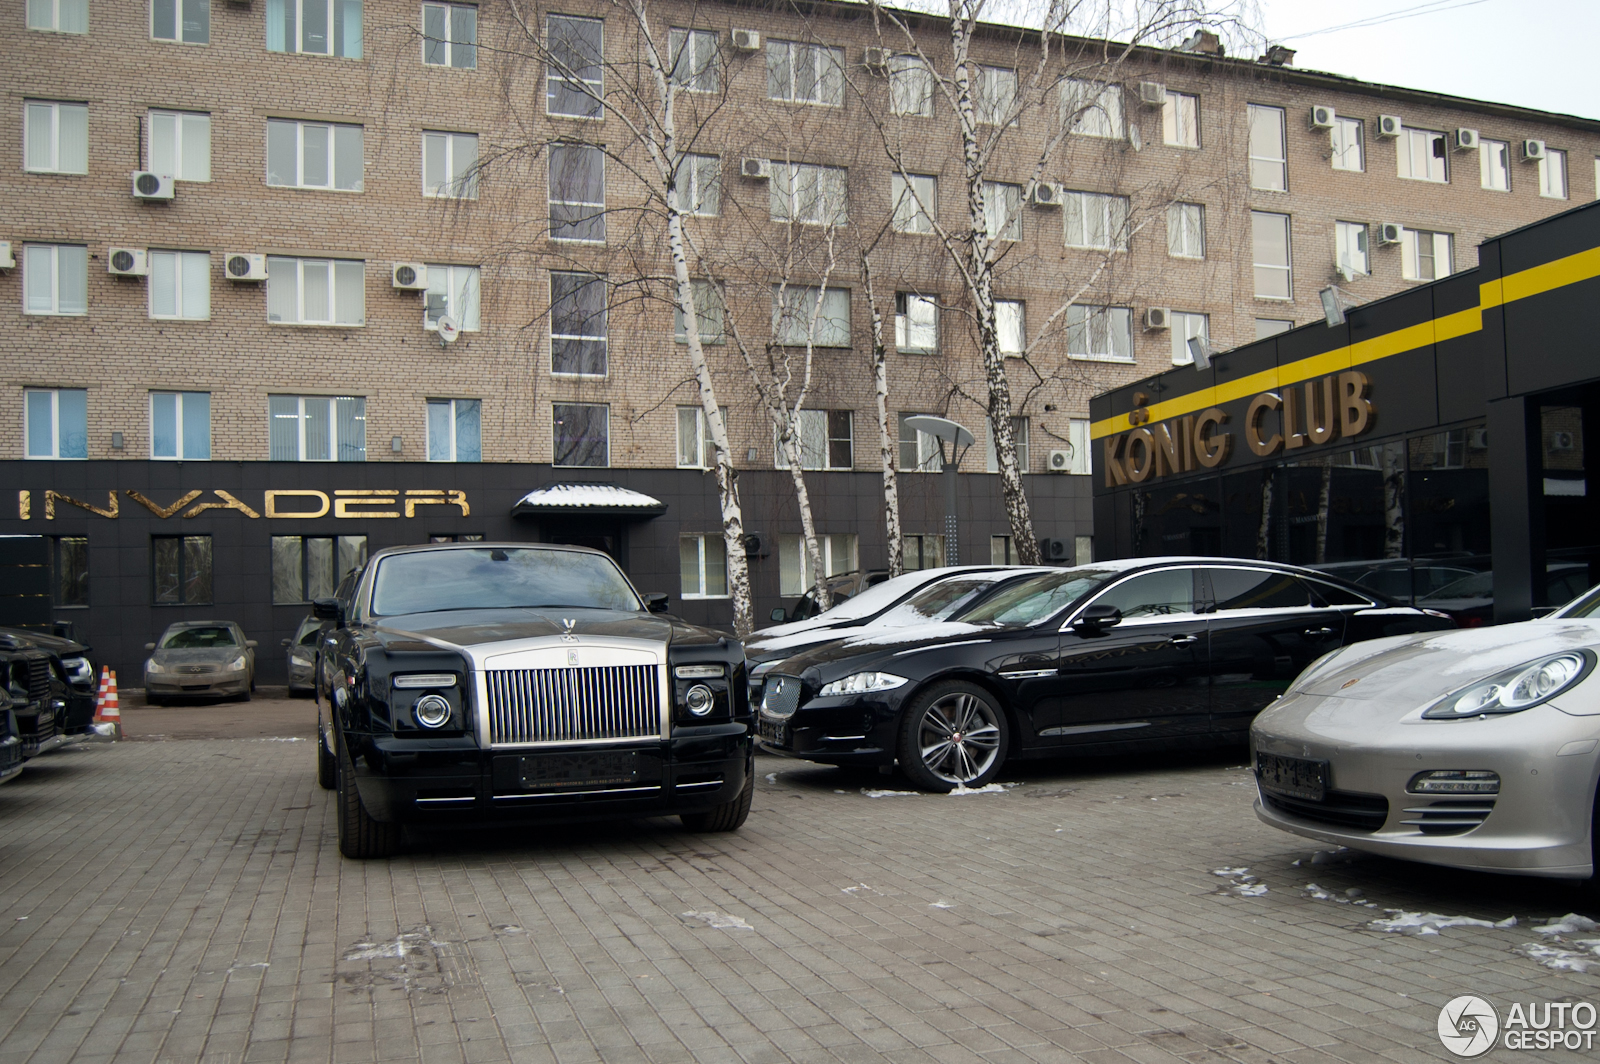 Moskou 2012: Lifestyle & Supercars bij de König Motor Club